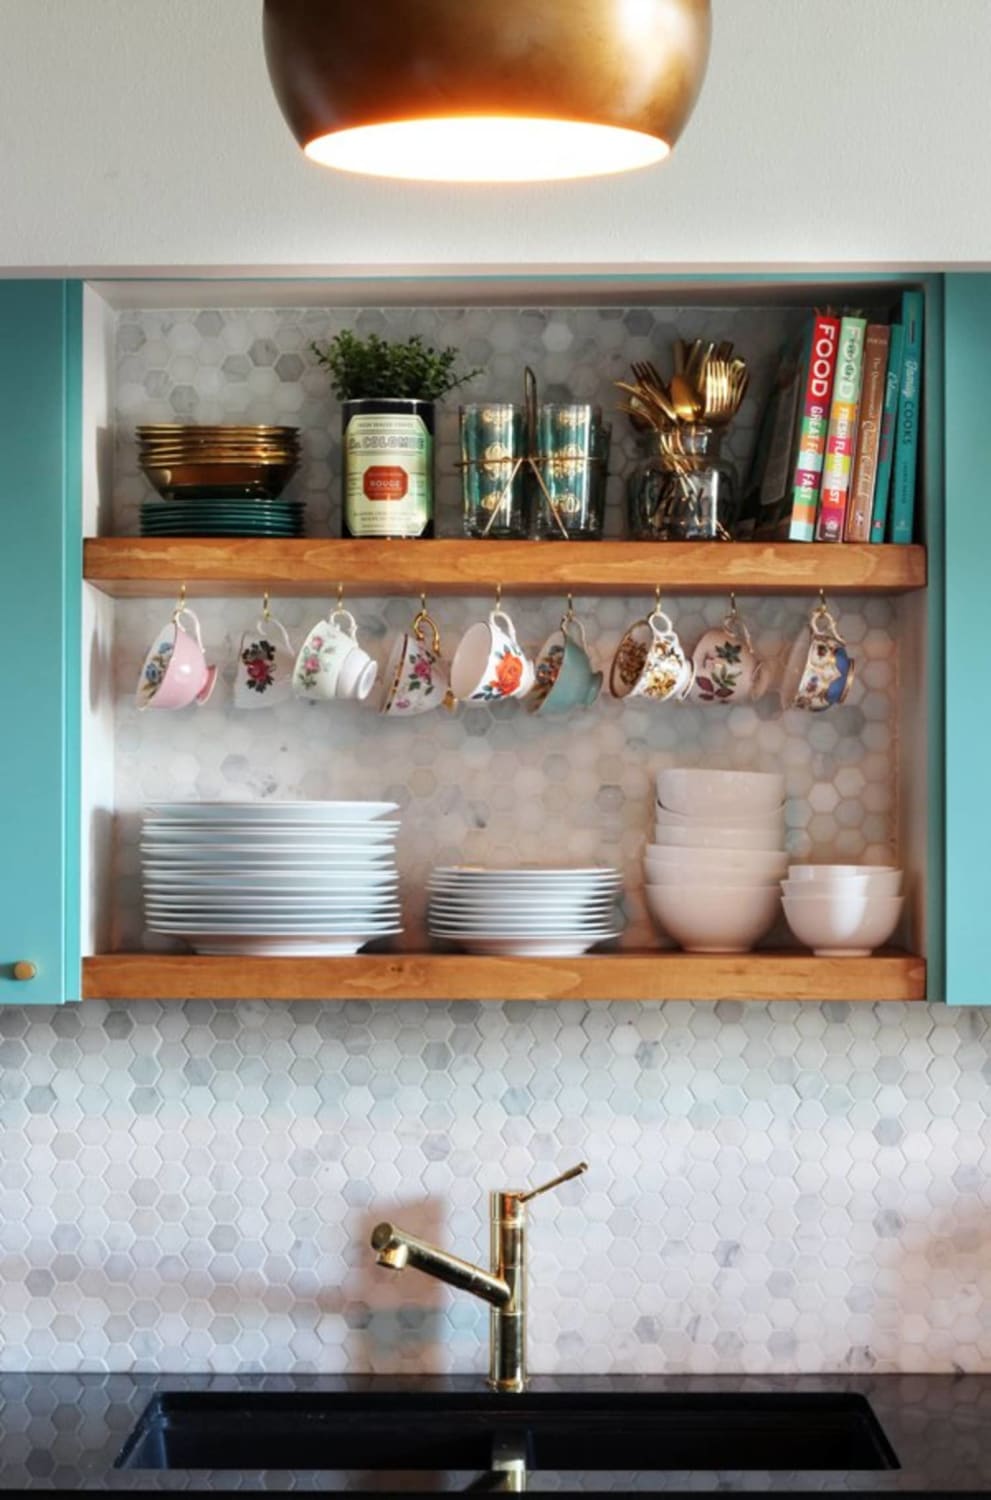 The Best Kitchen Shelf Ideas - Open Kitchen Shelving Ideas